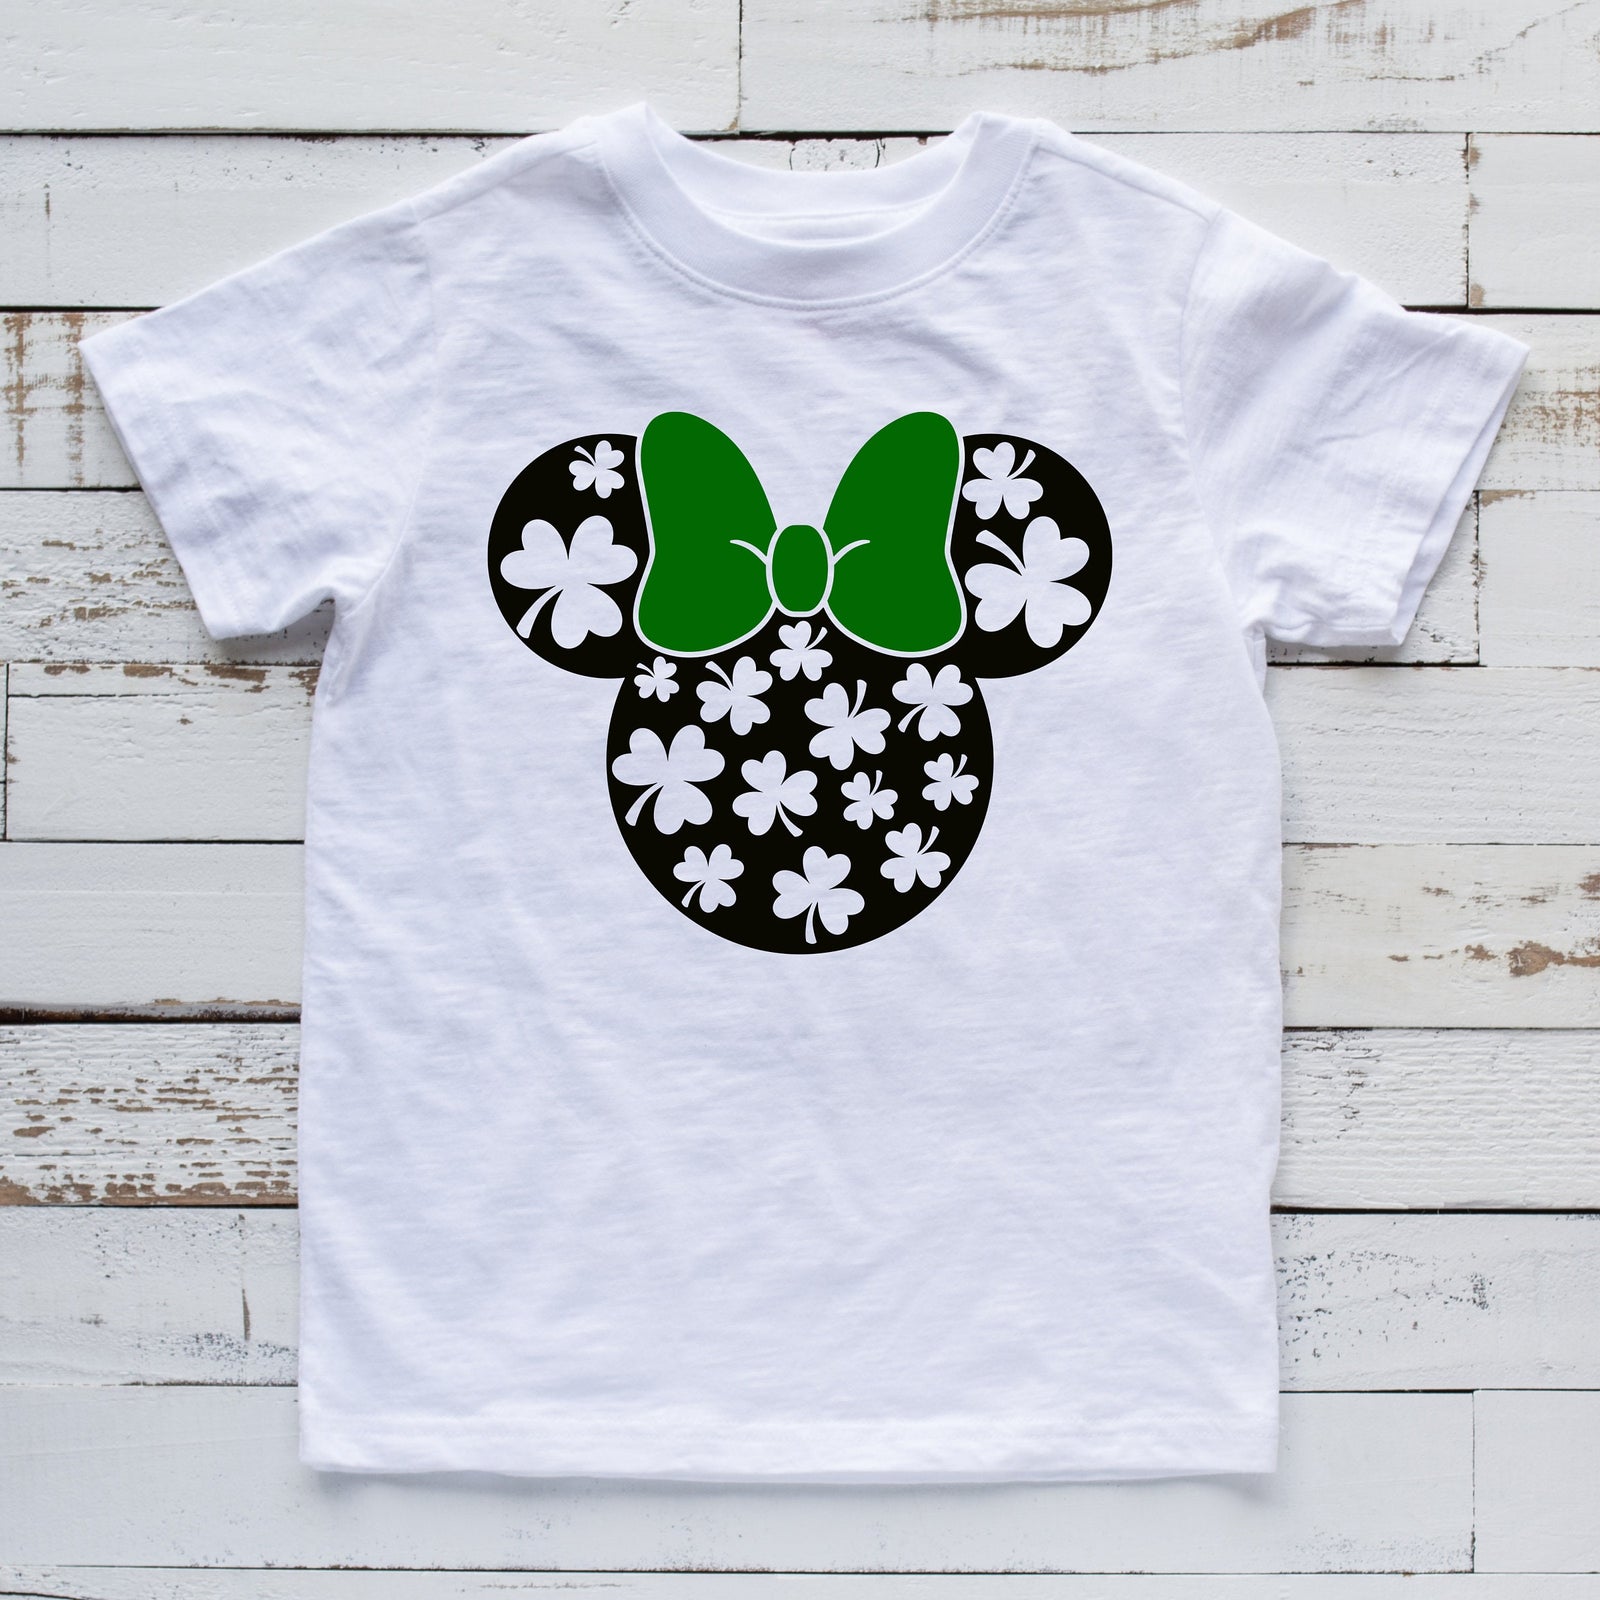 St. Patrick's Day Minnie Mouse T Shirt for Kids - Green Clover - Shamrocks - Lucky Disney Shirt